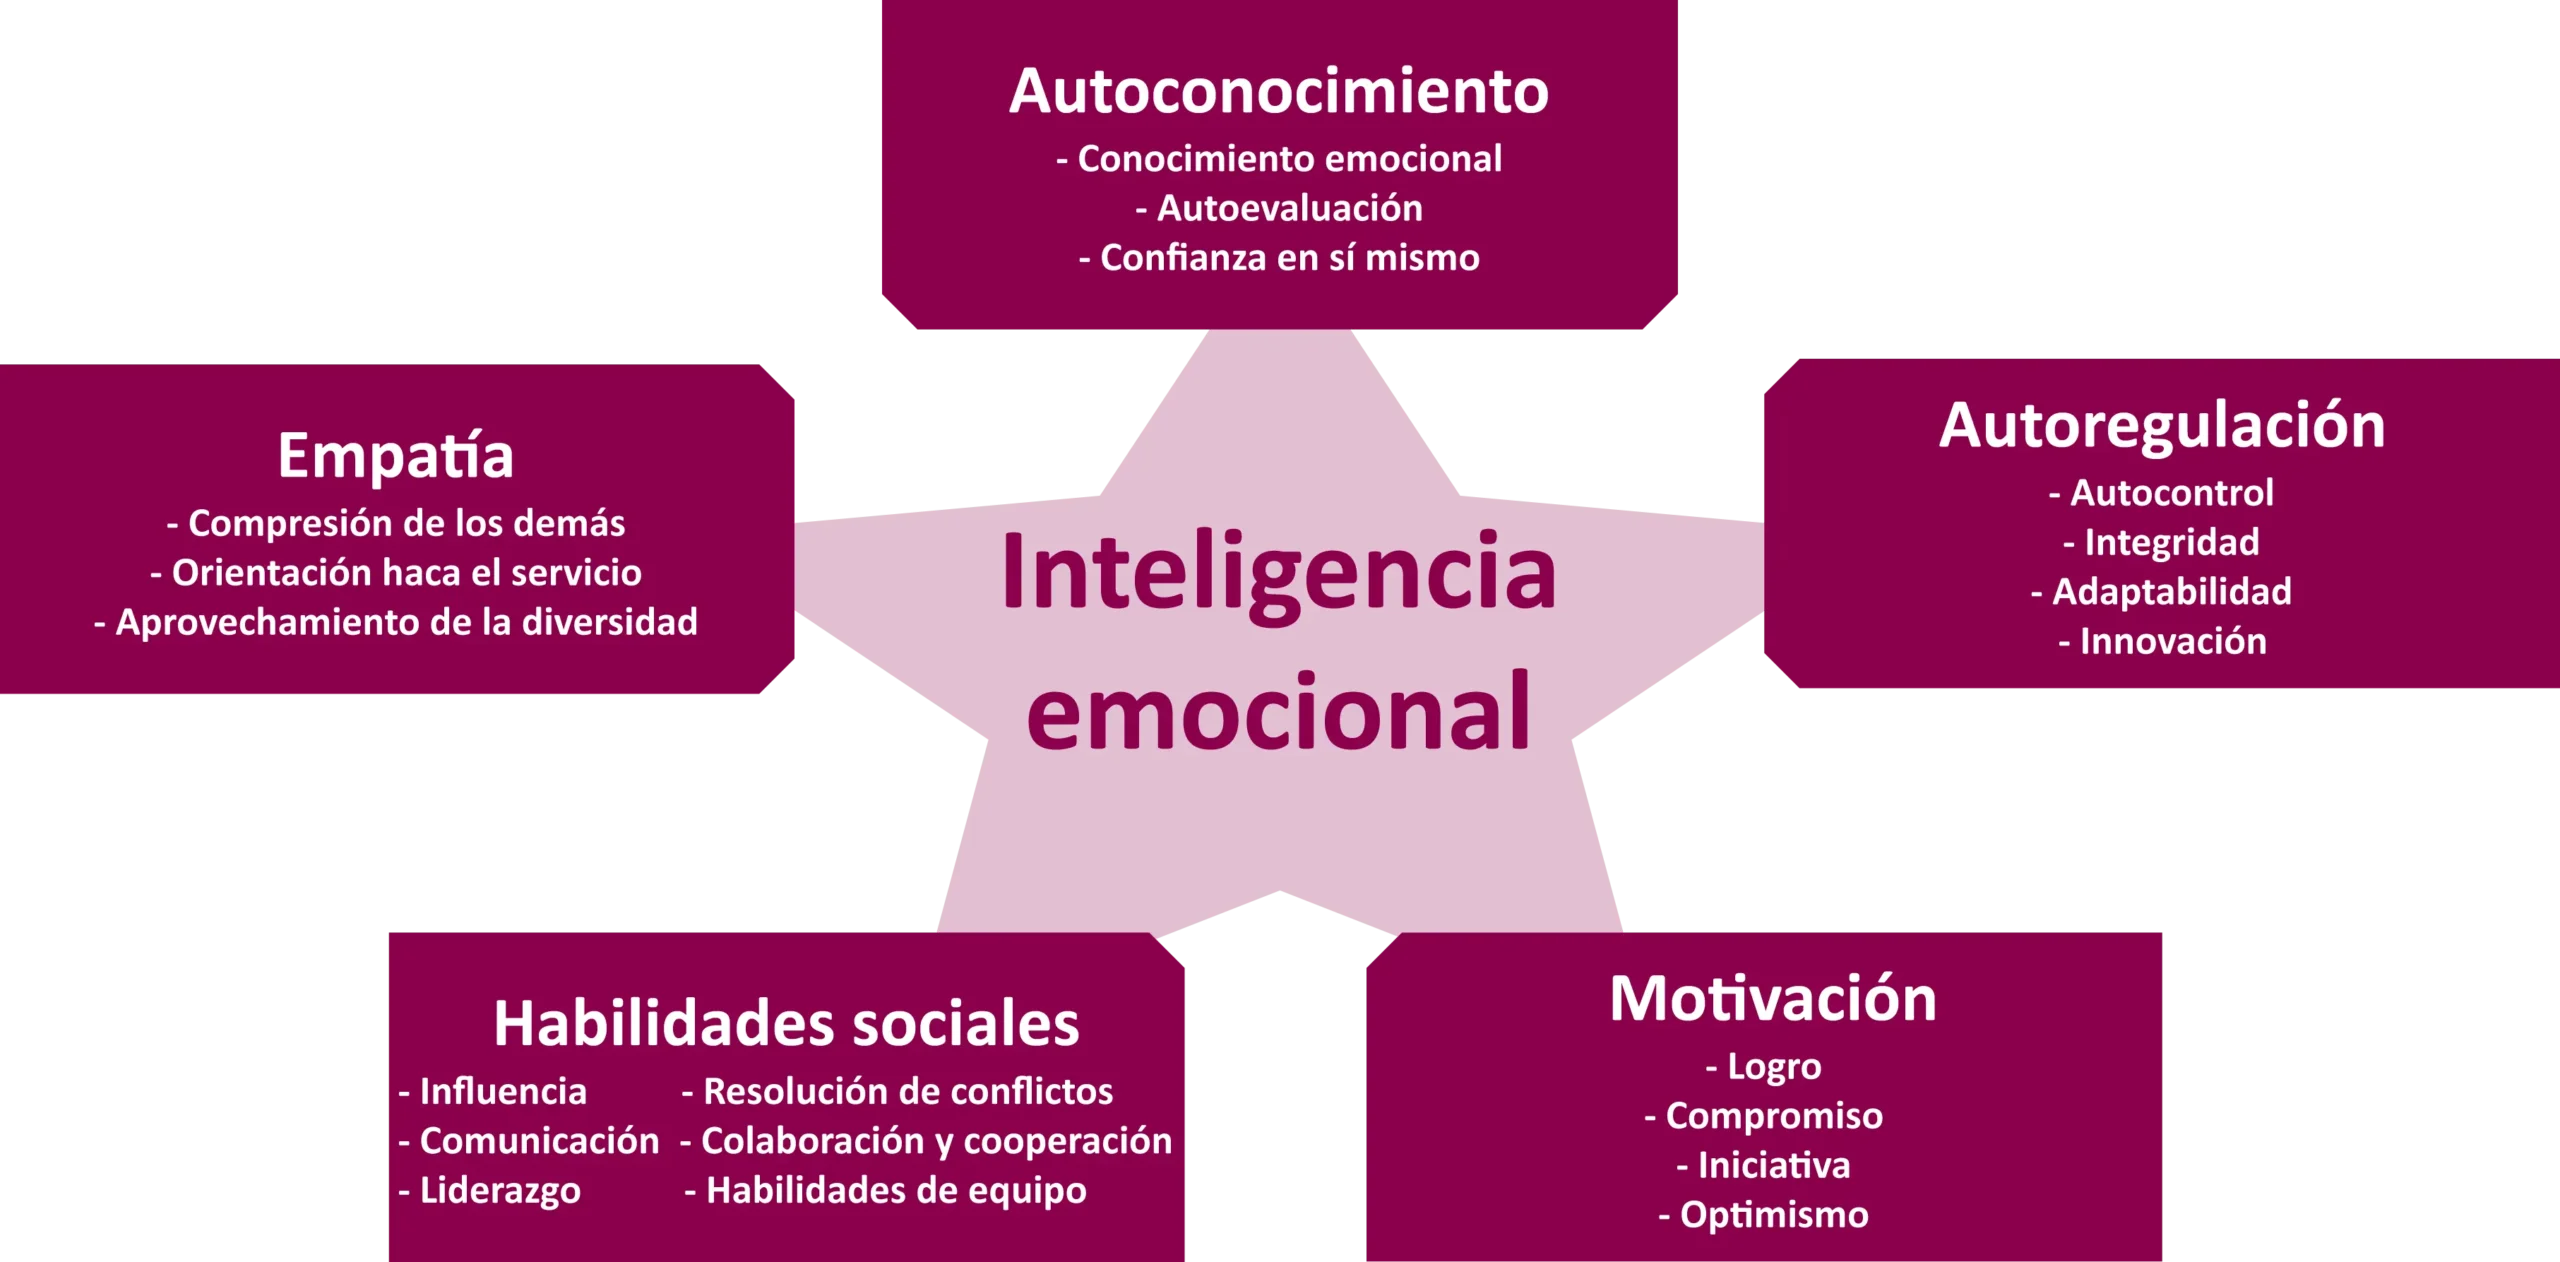 definicion de inteligencia emocional segun autores - Qué es la inteligencia emocional según Peter Salovey